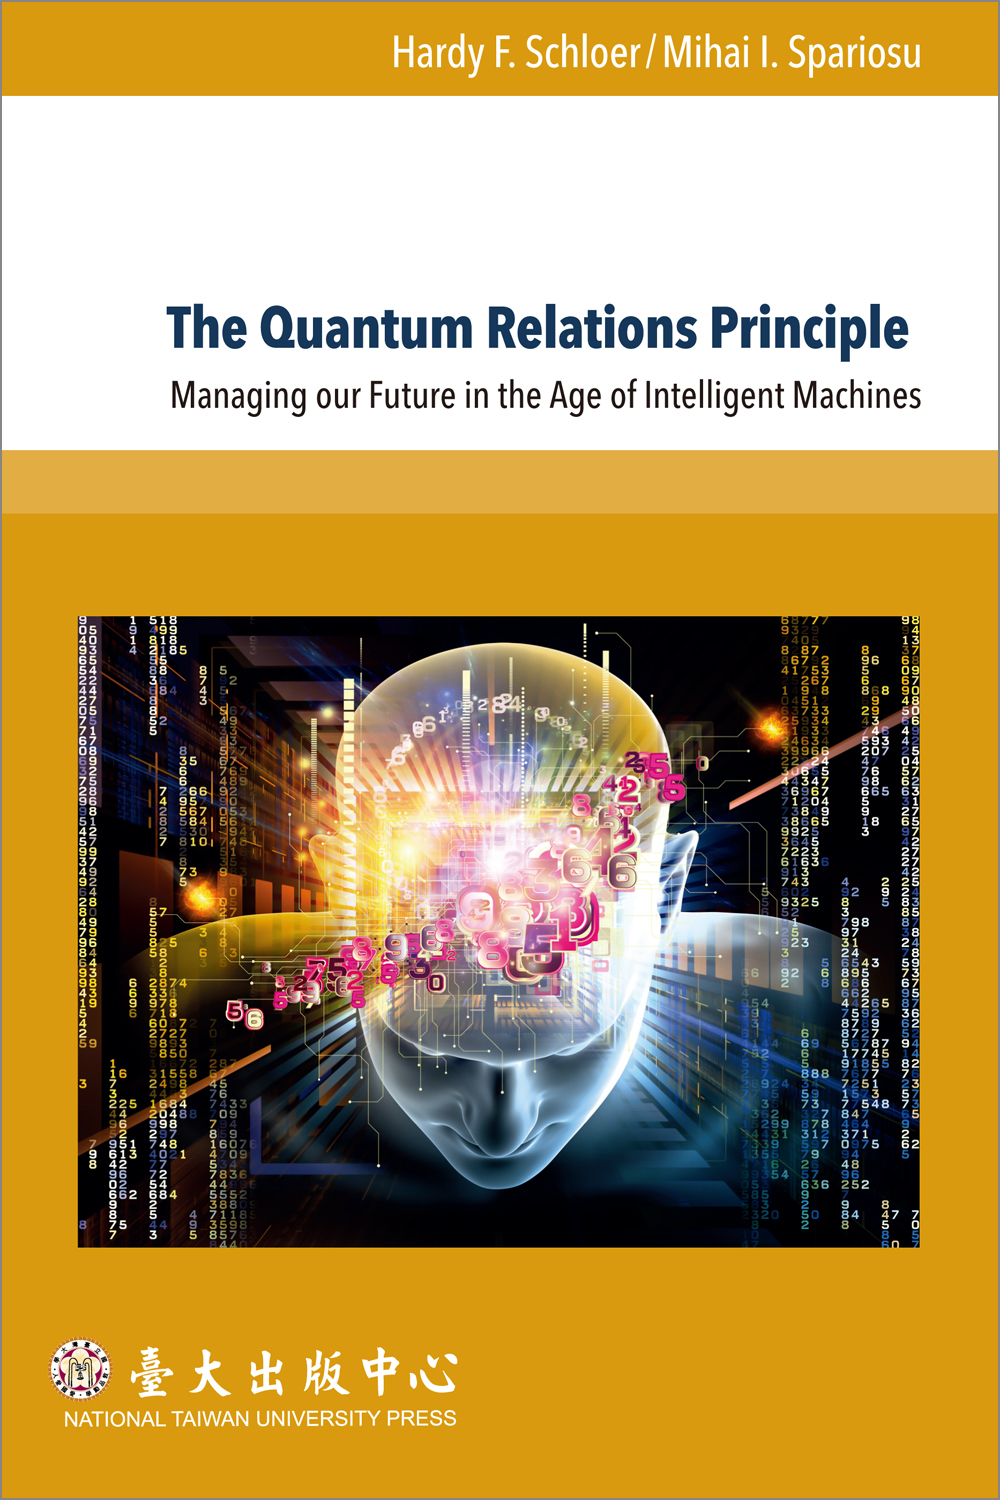 The Quantum Relations Principle: Managing our Future in the Age of Intelligent Machines